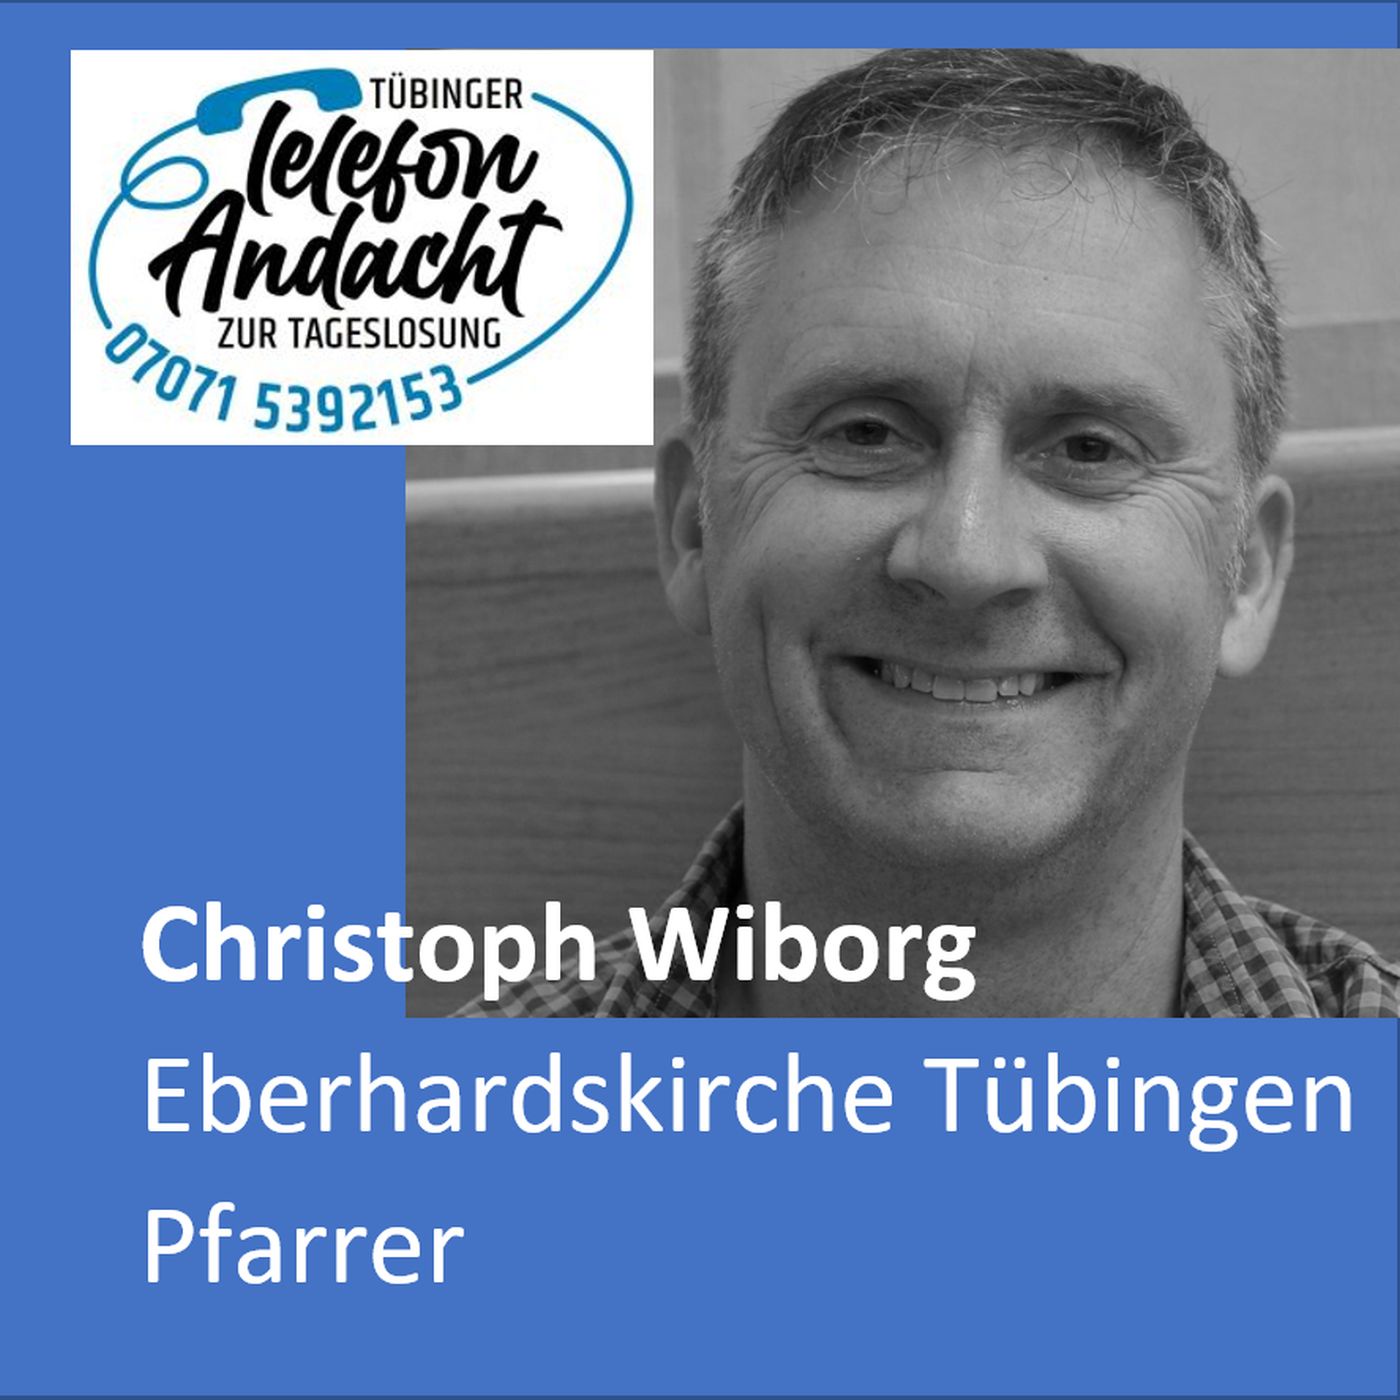 24 04 18 Christoph Wiborg